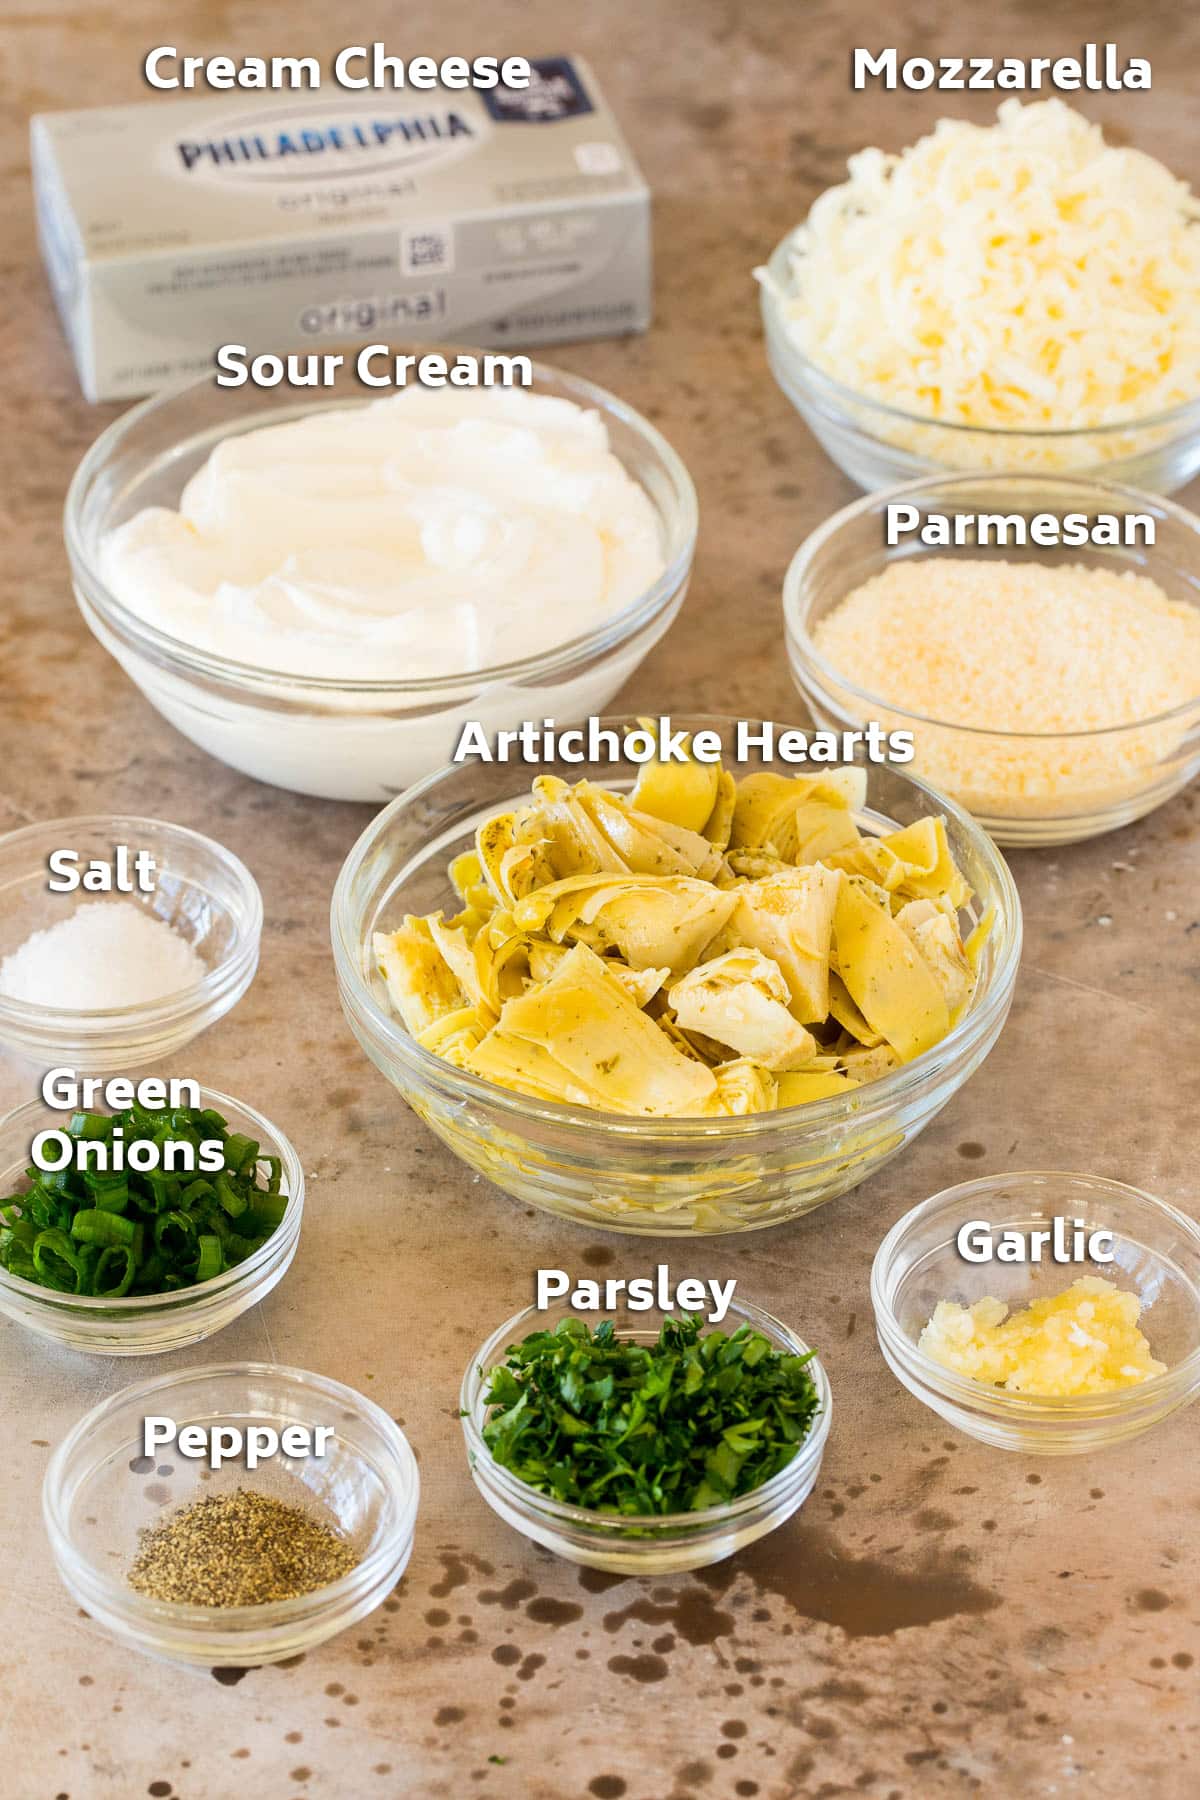 Bowls of ingredients including artichoke hearts, cheese, herbs and seasonings.